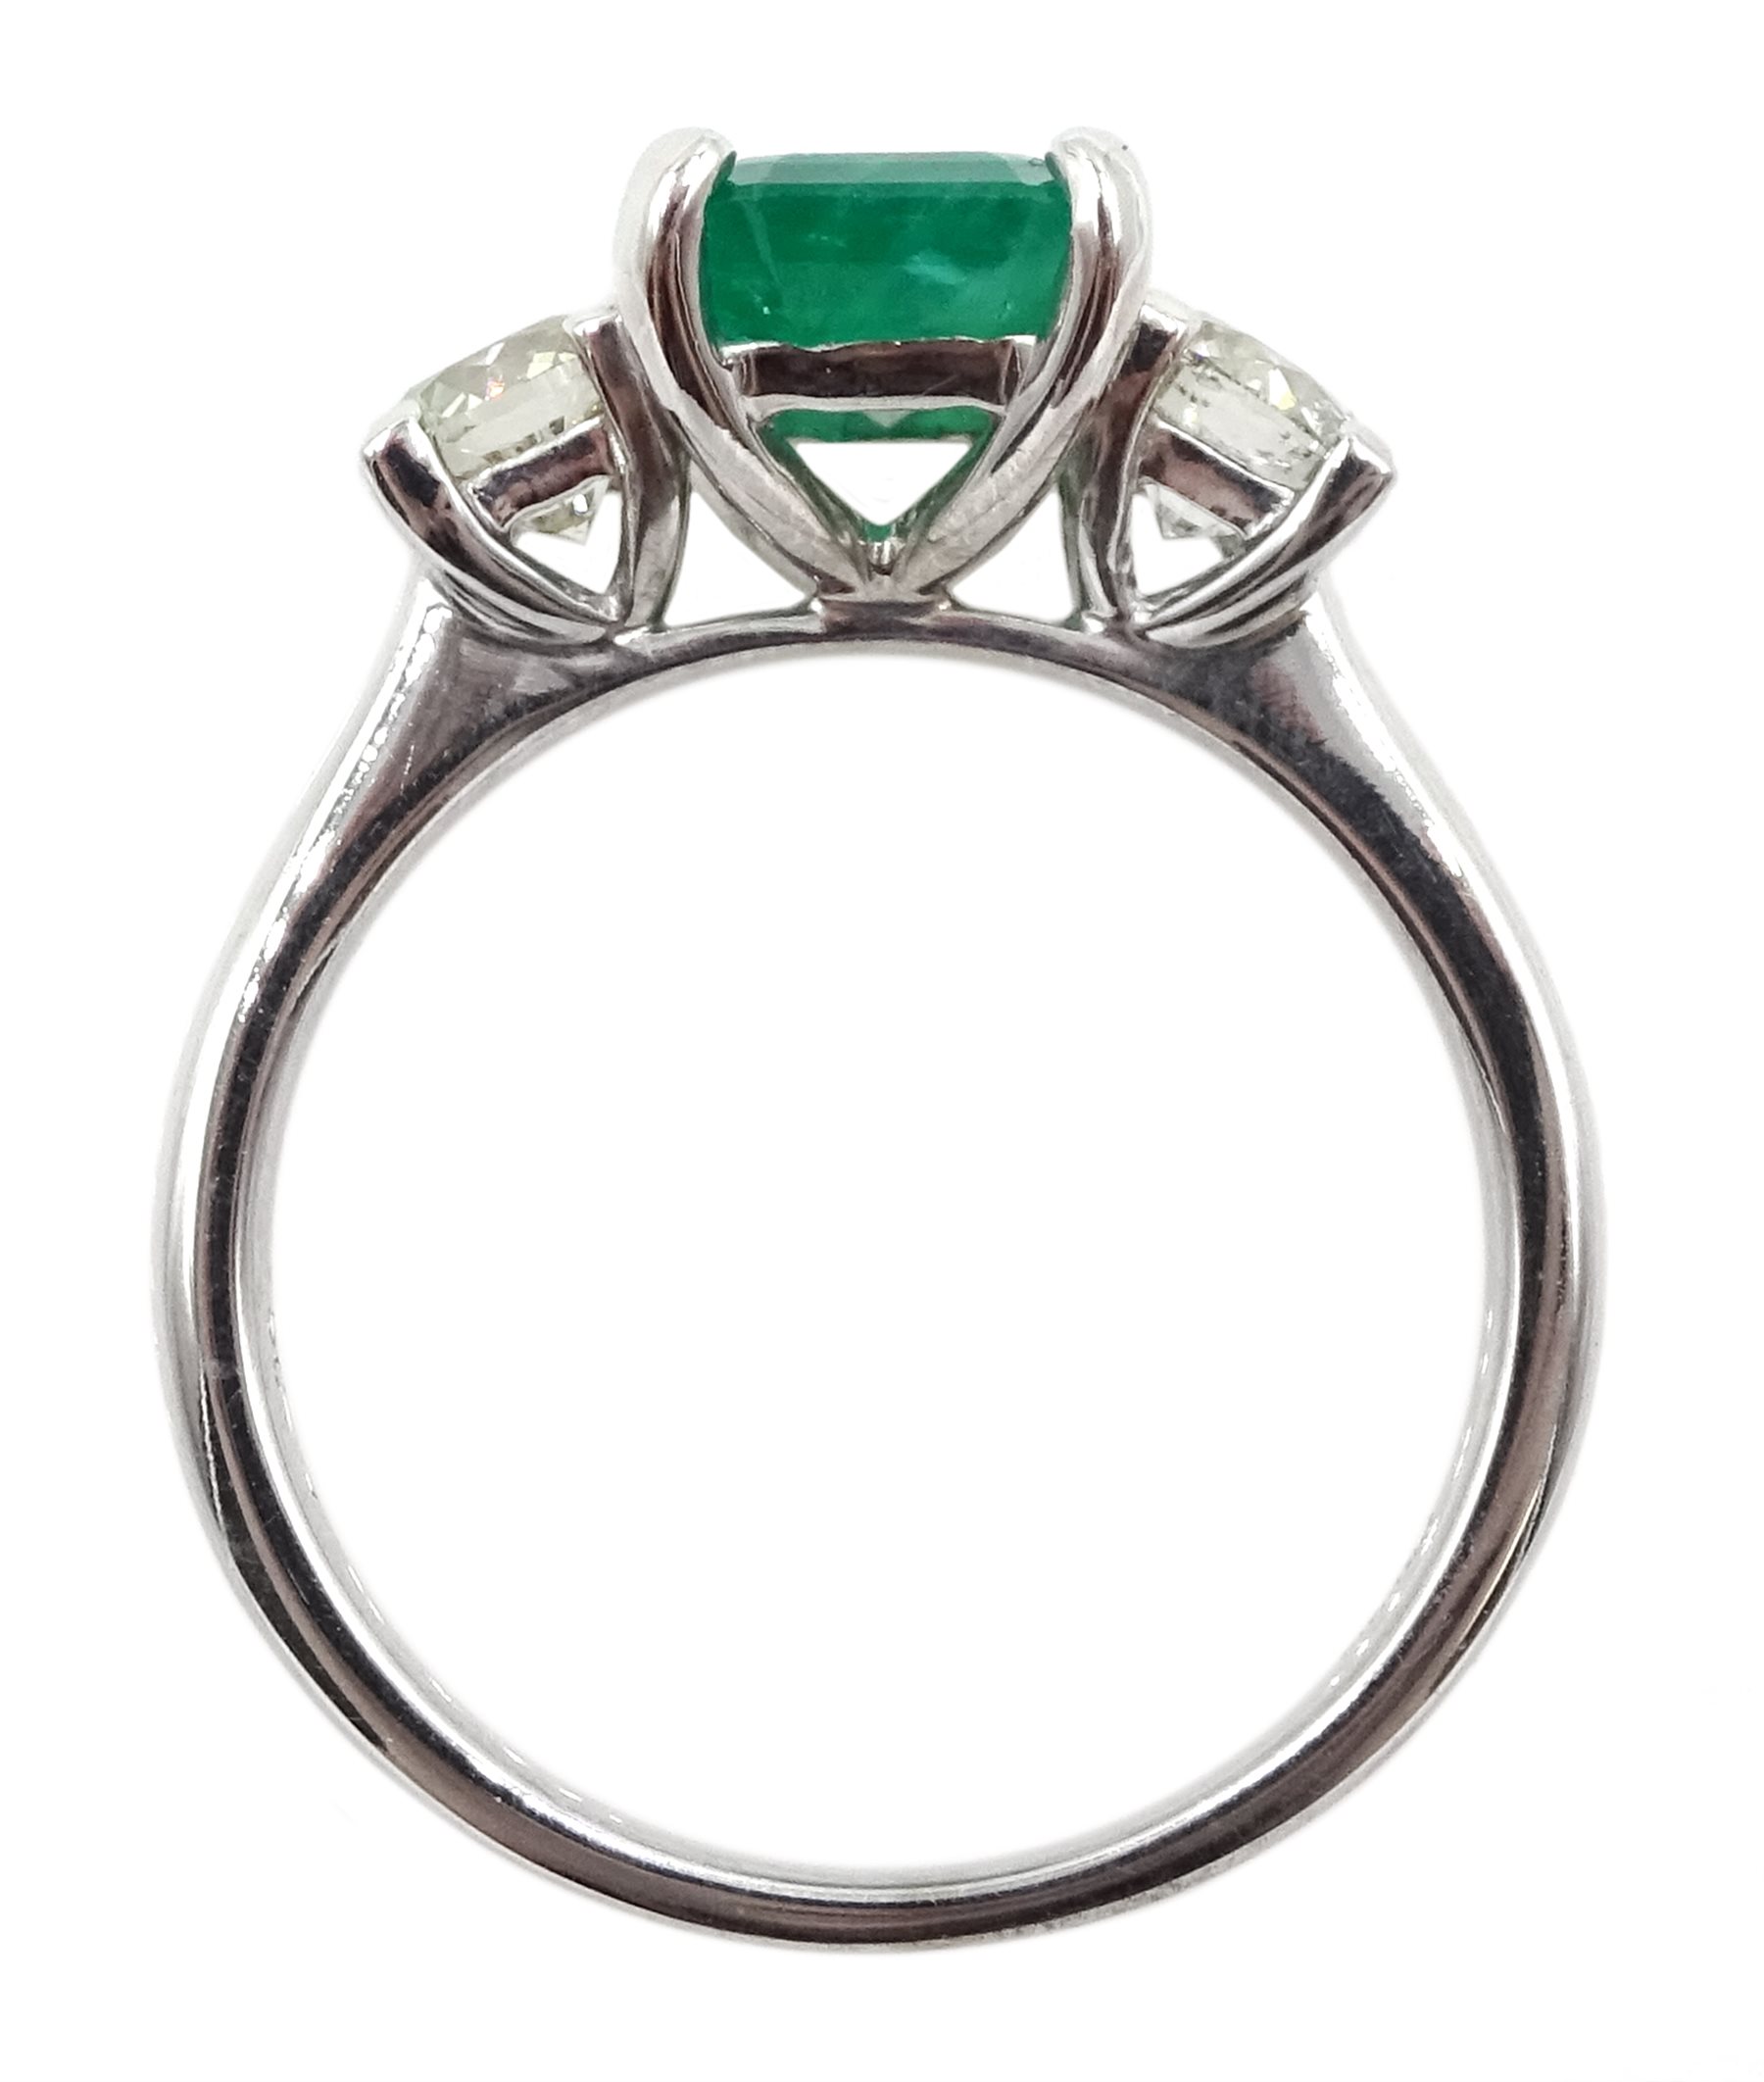 18ct white gold emerald and diamond three stone ring - Image 5 of 7